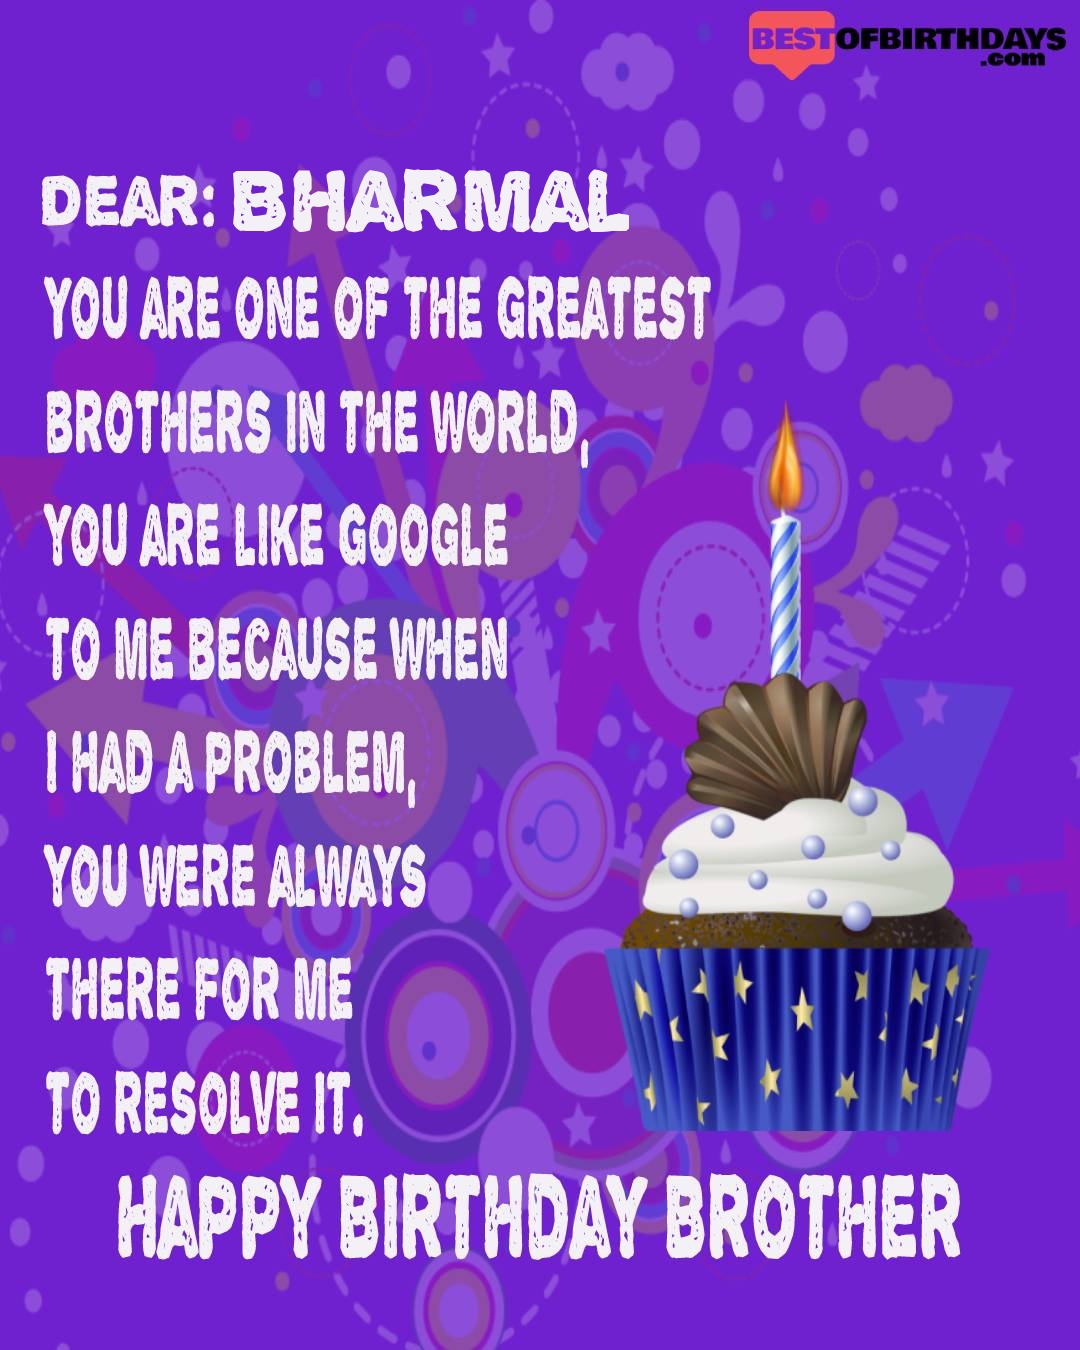 Happy birthday bharmal bhai brother bro